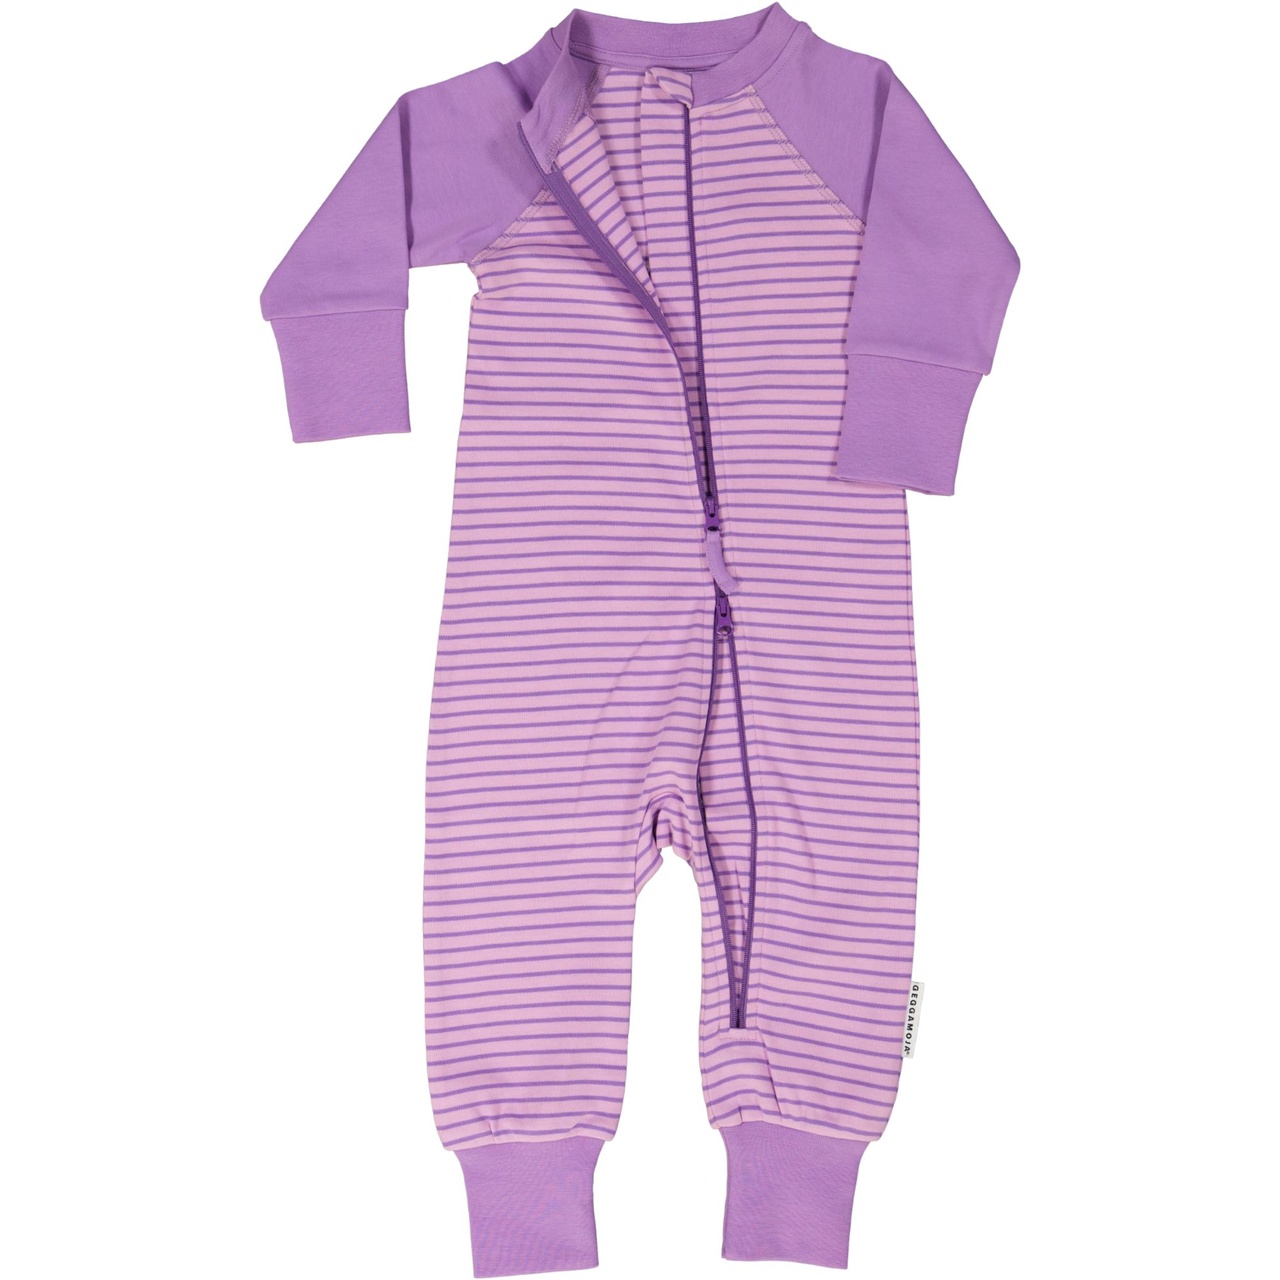 Pyjamas L.purple/purple  98/104